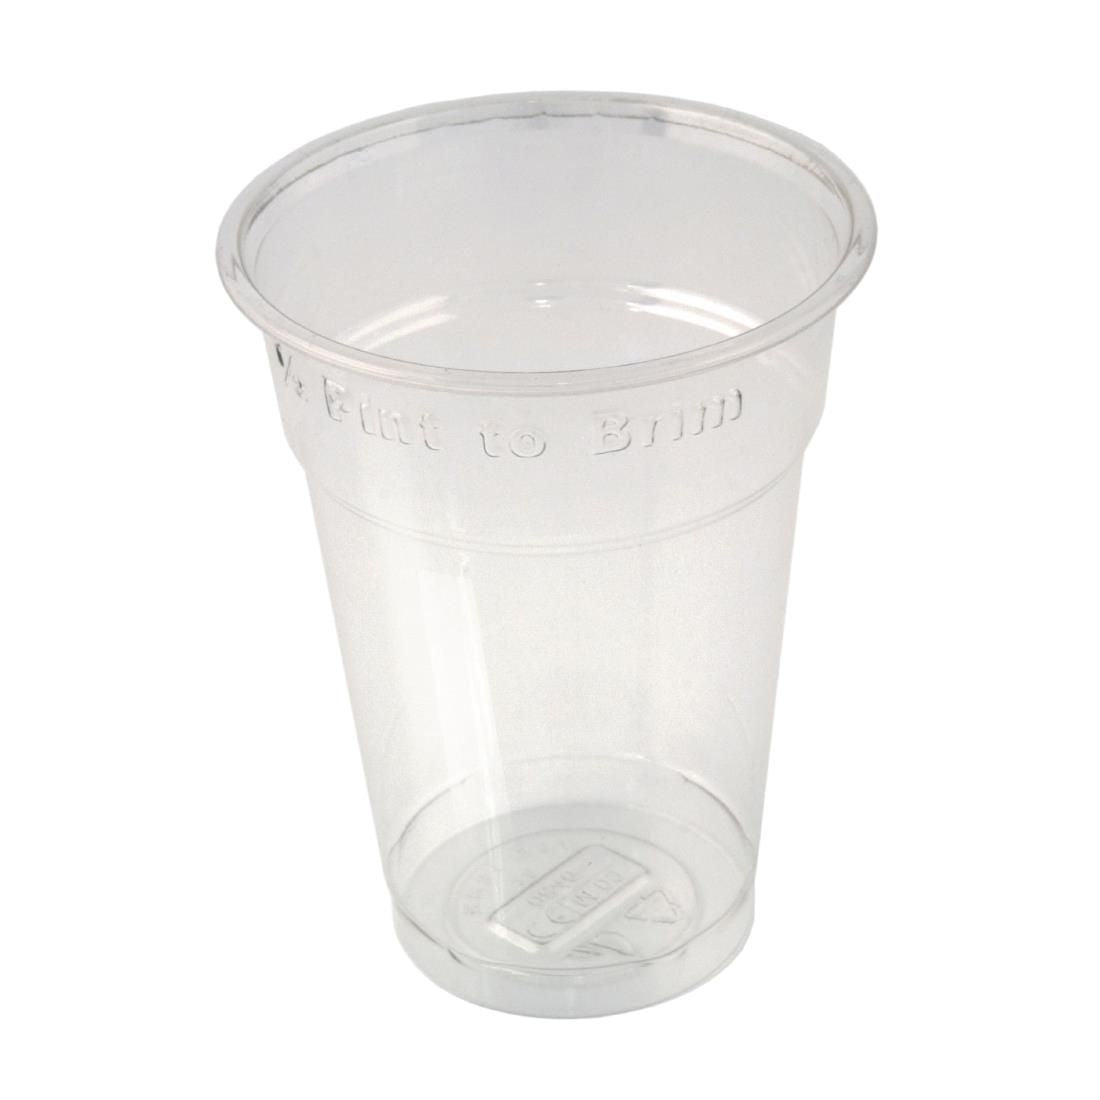 Huhtamaki Disposable Half Pint to Brim Tumbler (Pack of 1000) - CM118 Disposable Glasses Huhtamaki   